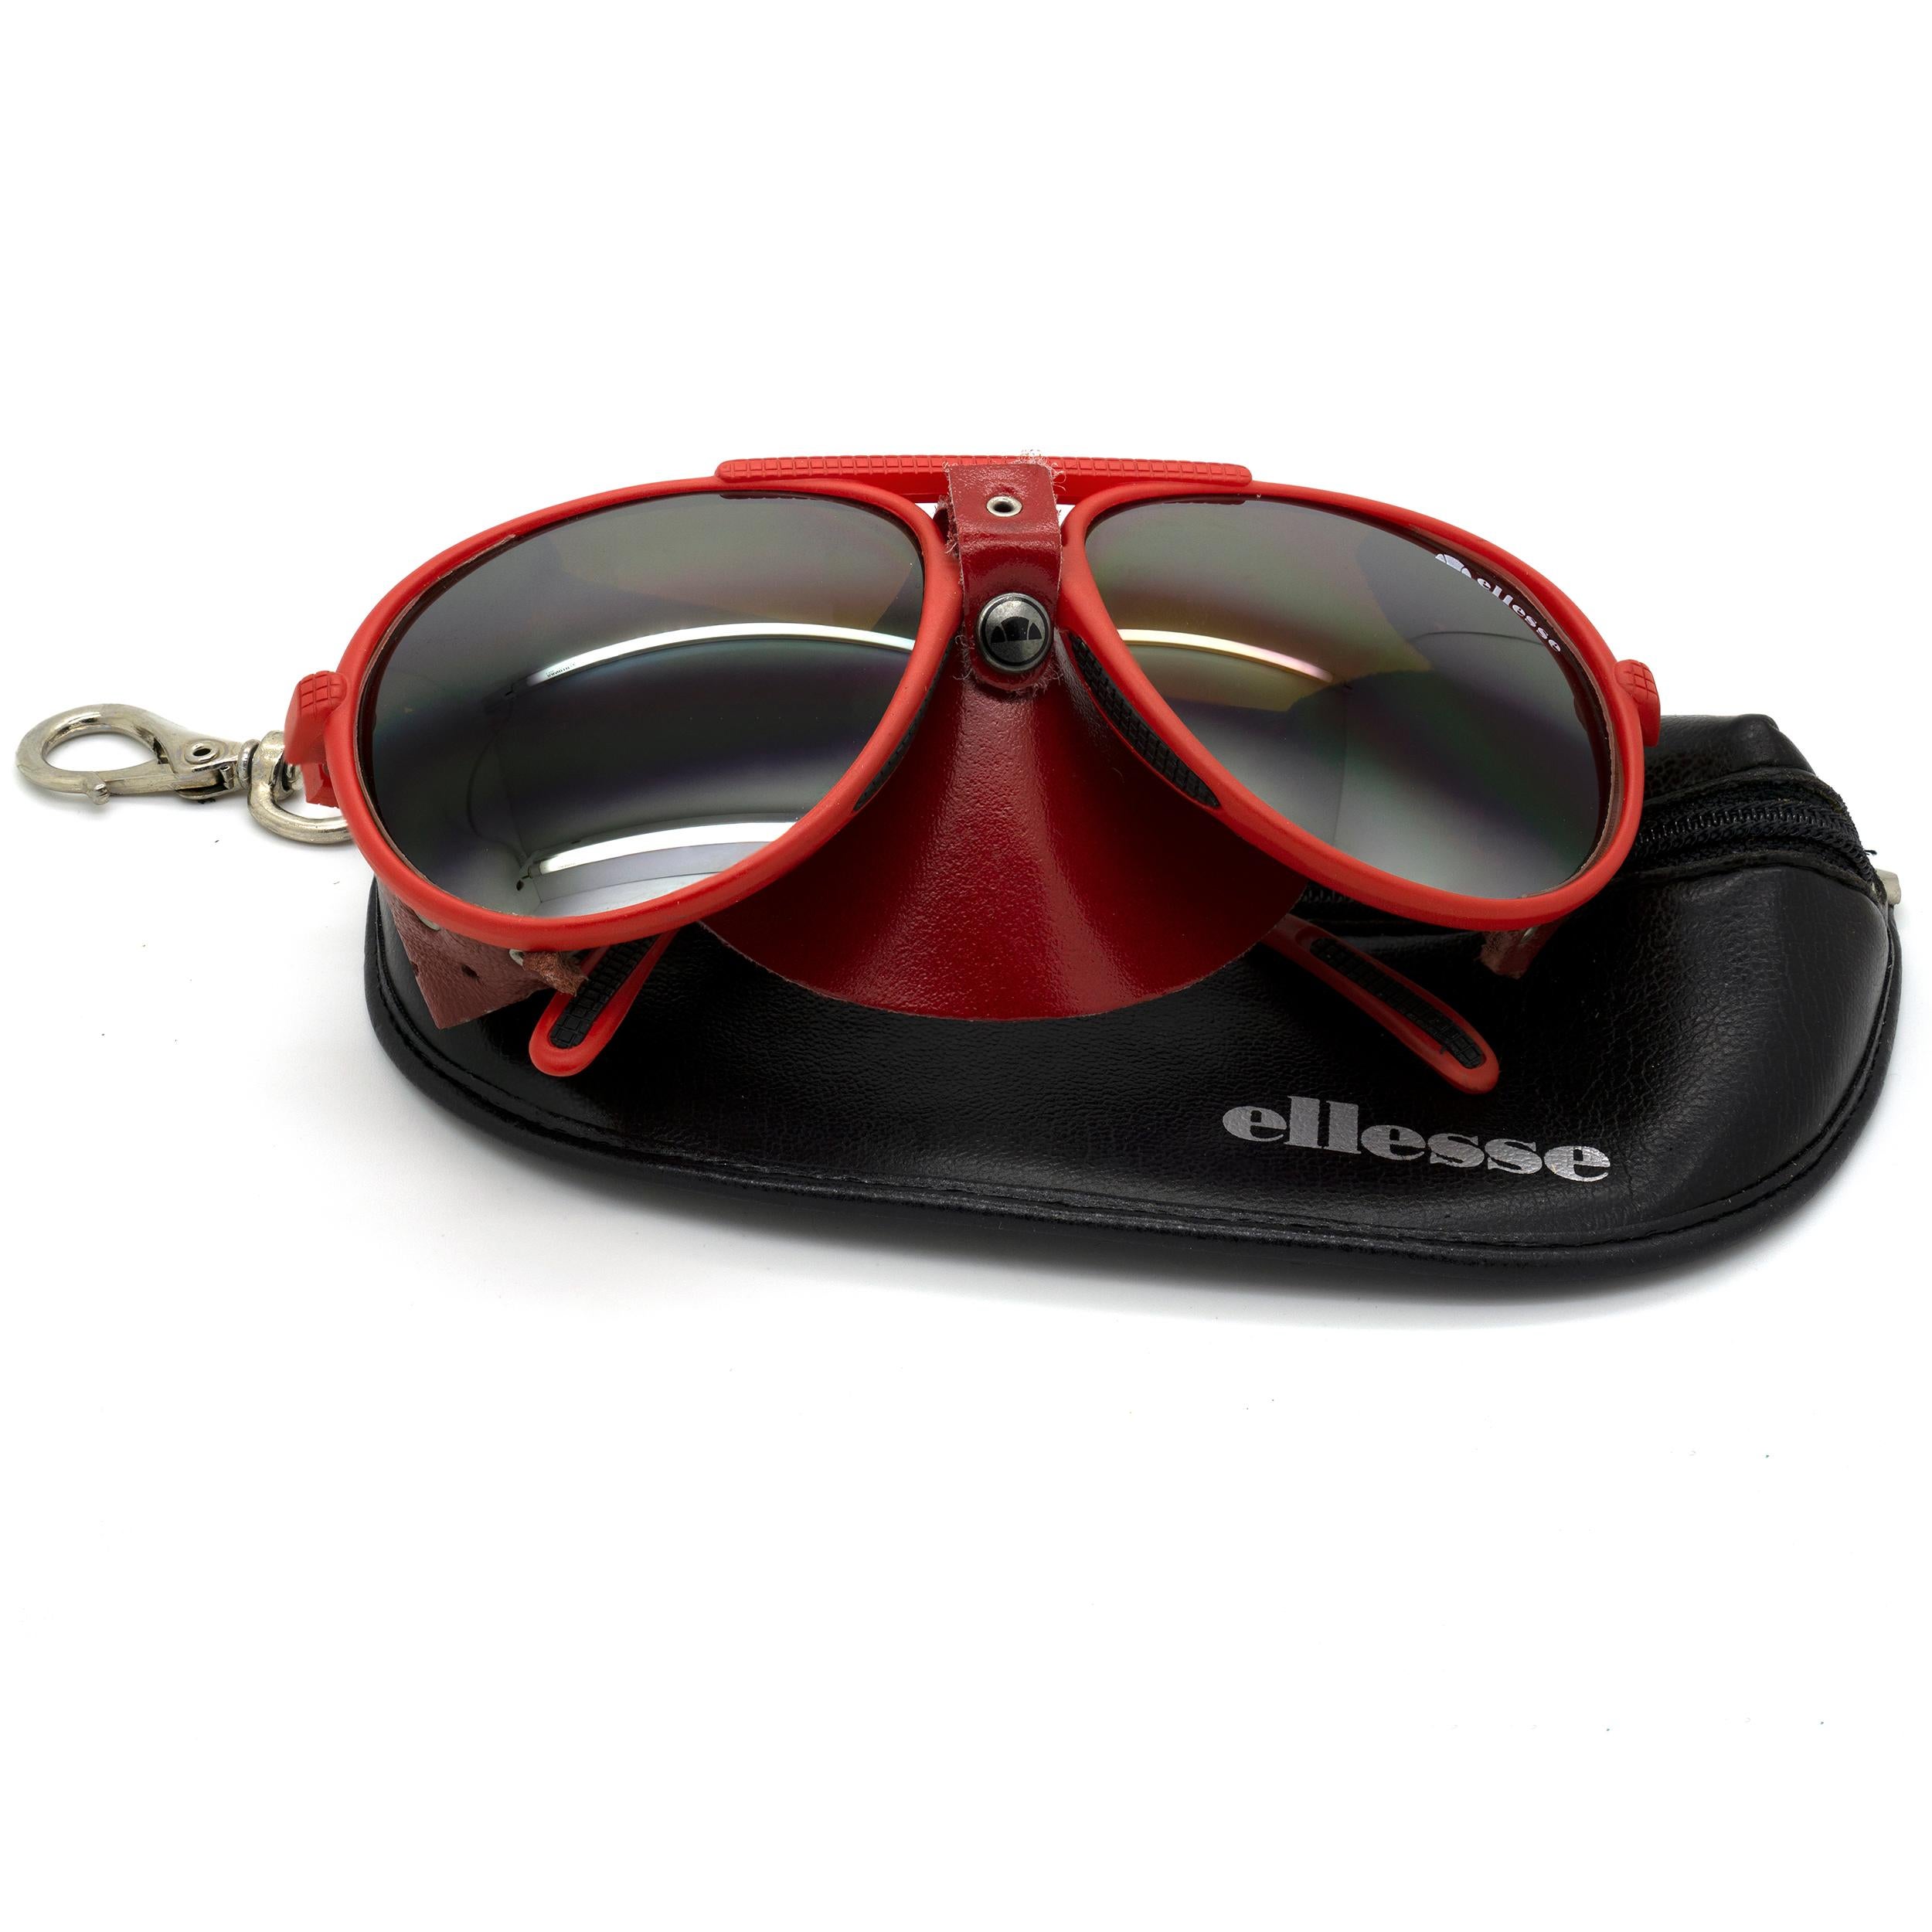 Ellesse aviator vintage sunglasses side shields In New Condition For Sale In Santa Clarita, CA